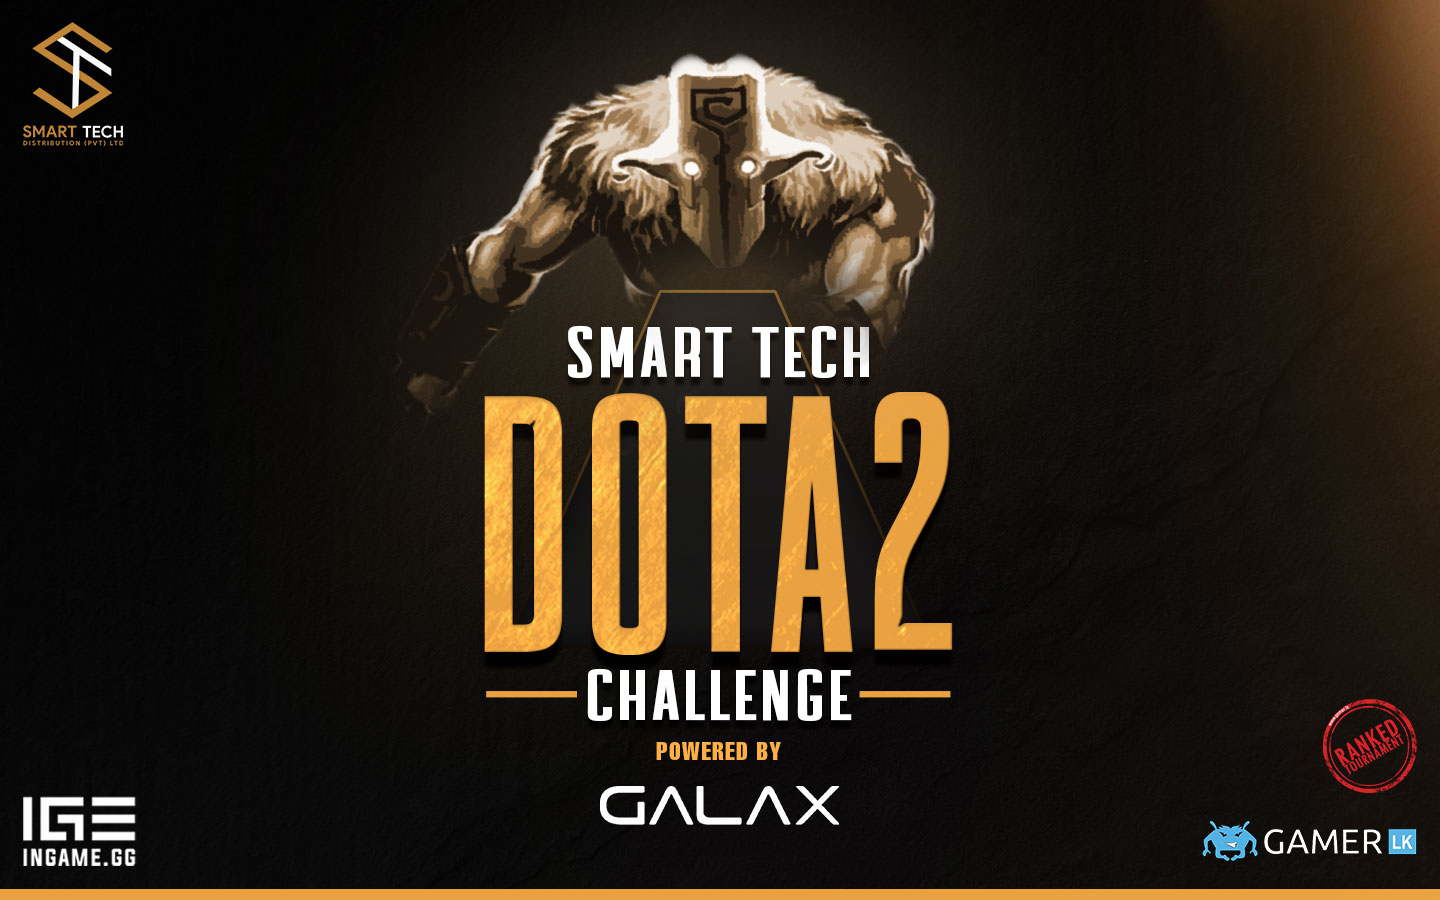 Smart Tech Dota 2 Challenge powered by Galax